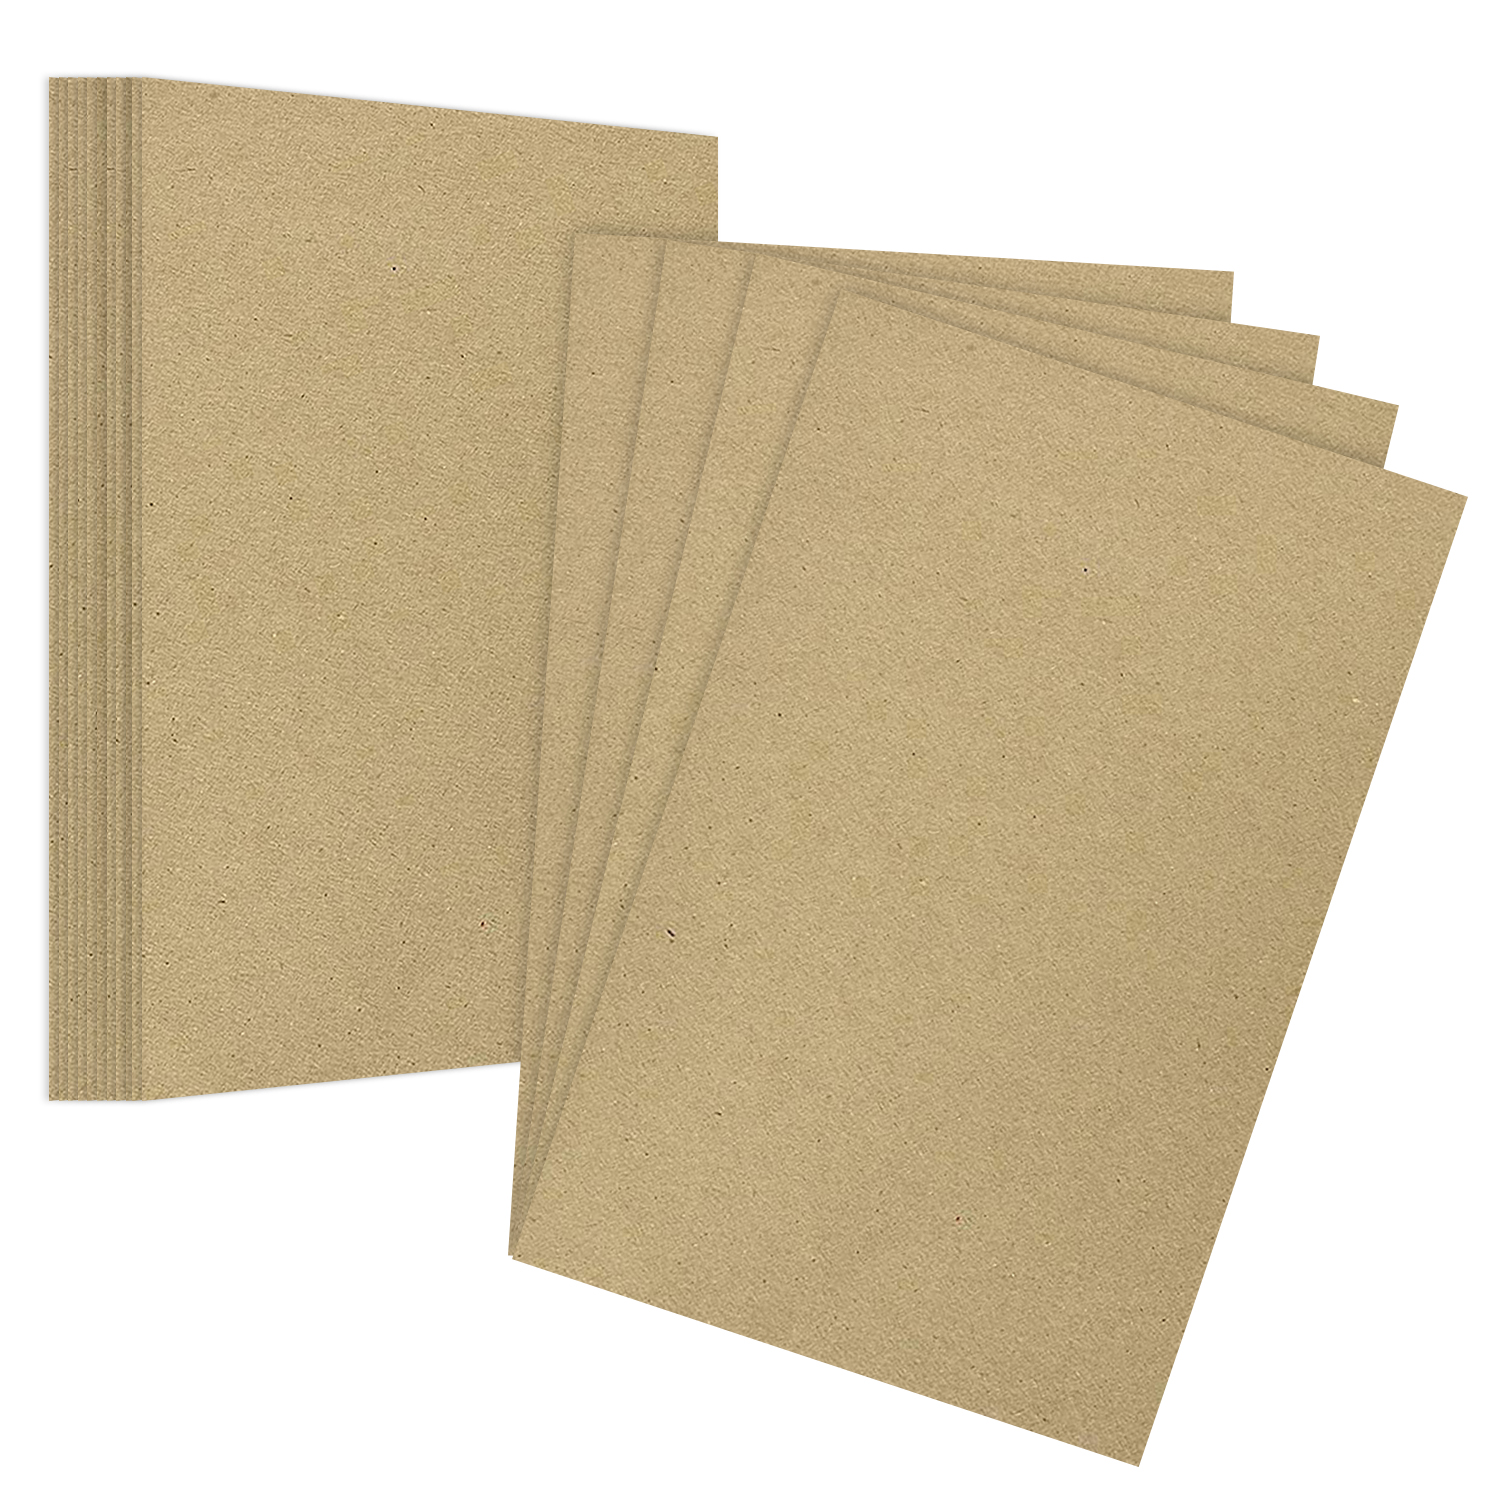 100 Sheets Chipboard 11 x 17 inch 30pt Medium Weight Brown Kraft Cardboard 